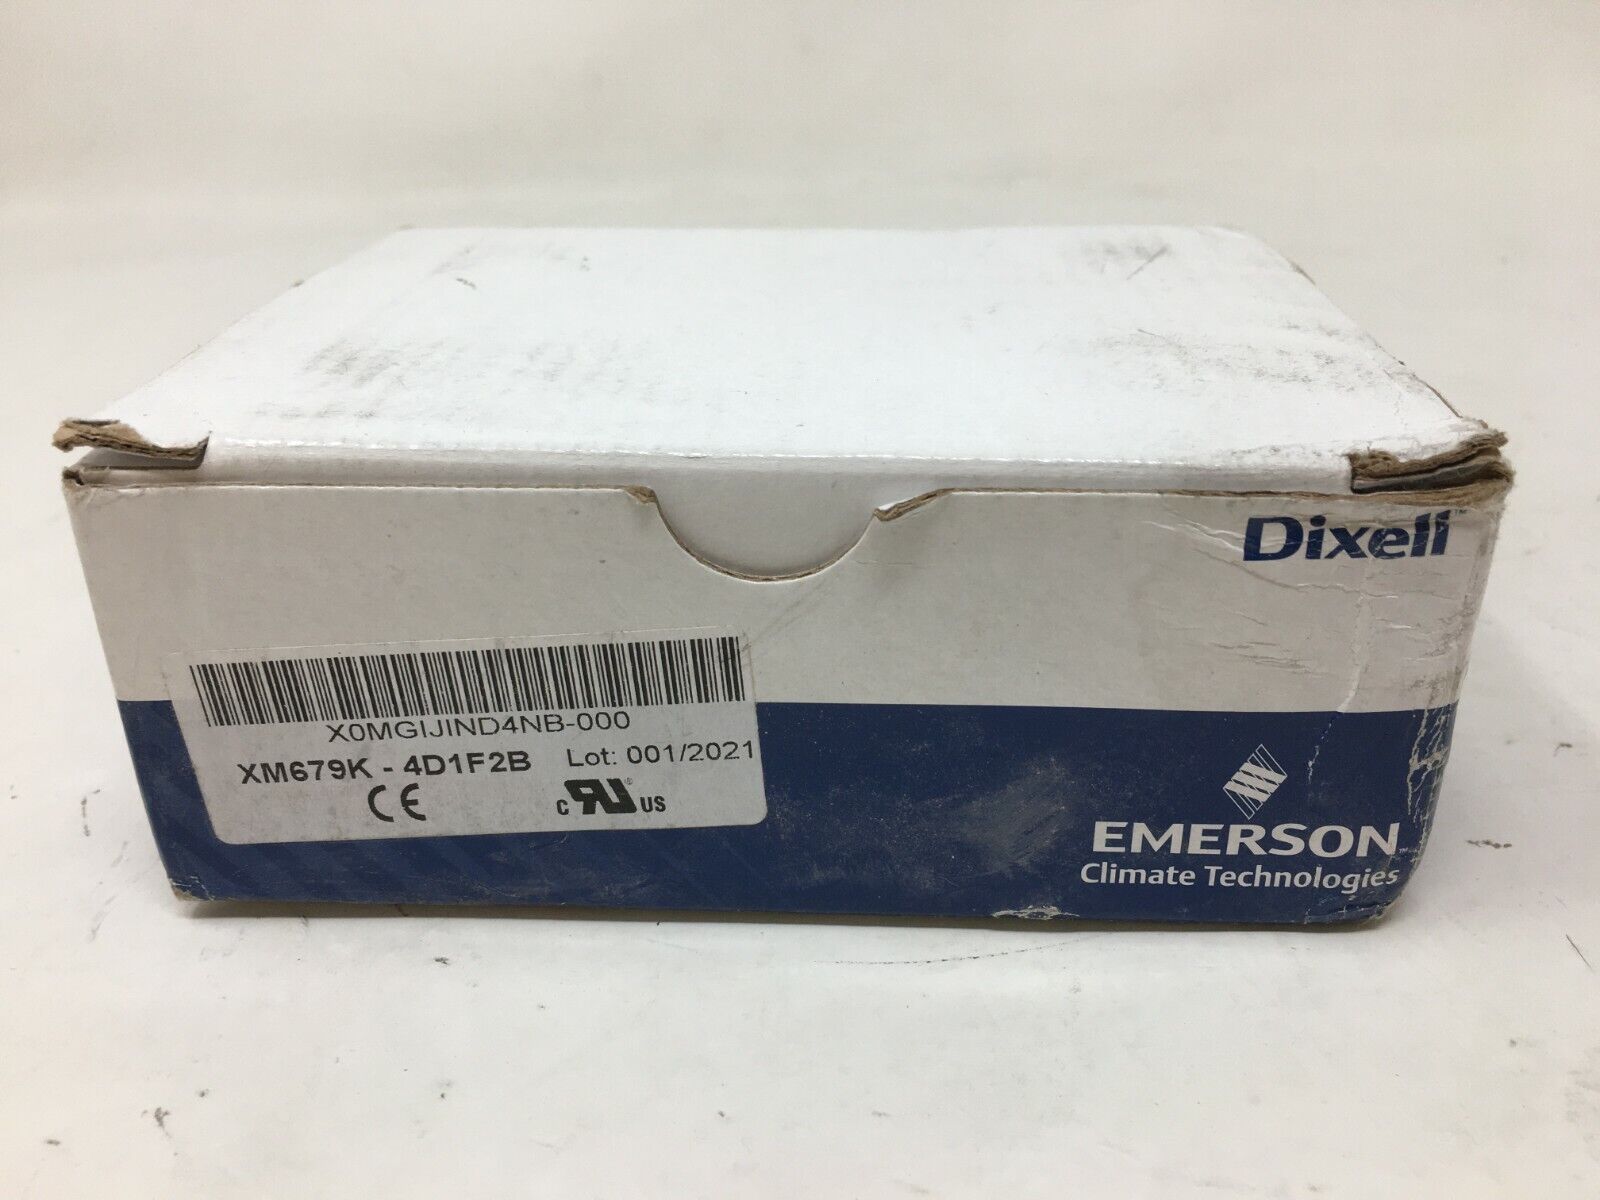 Emerson Climate Technologies Dixell Temperature Controller XM679K-4D1F2B 